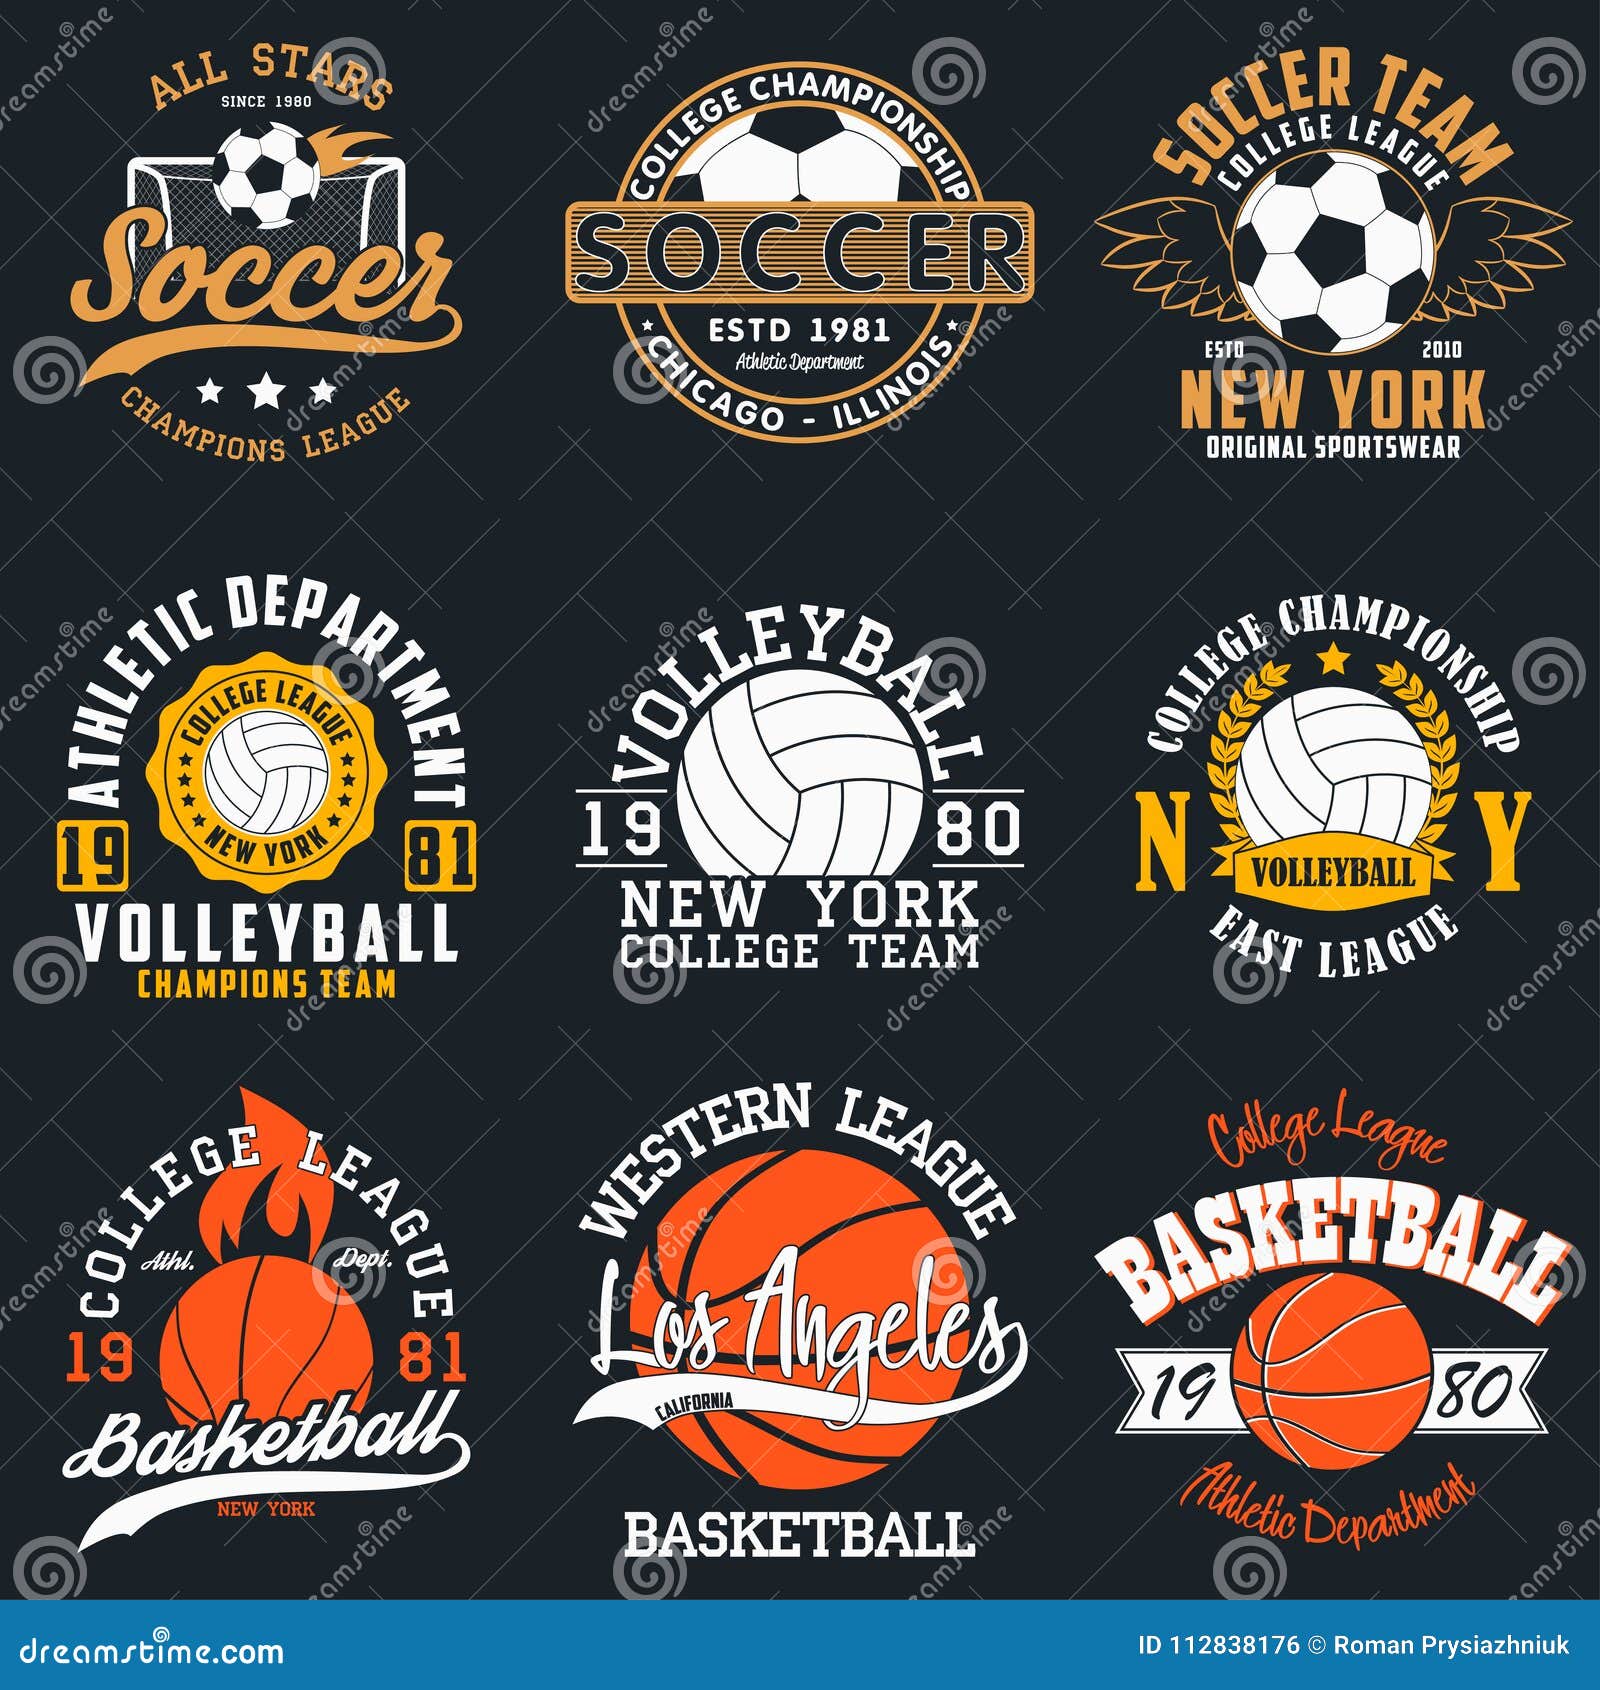 Volleyball Playoffs - Volleyball T-shirts